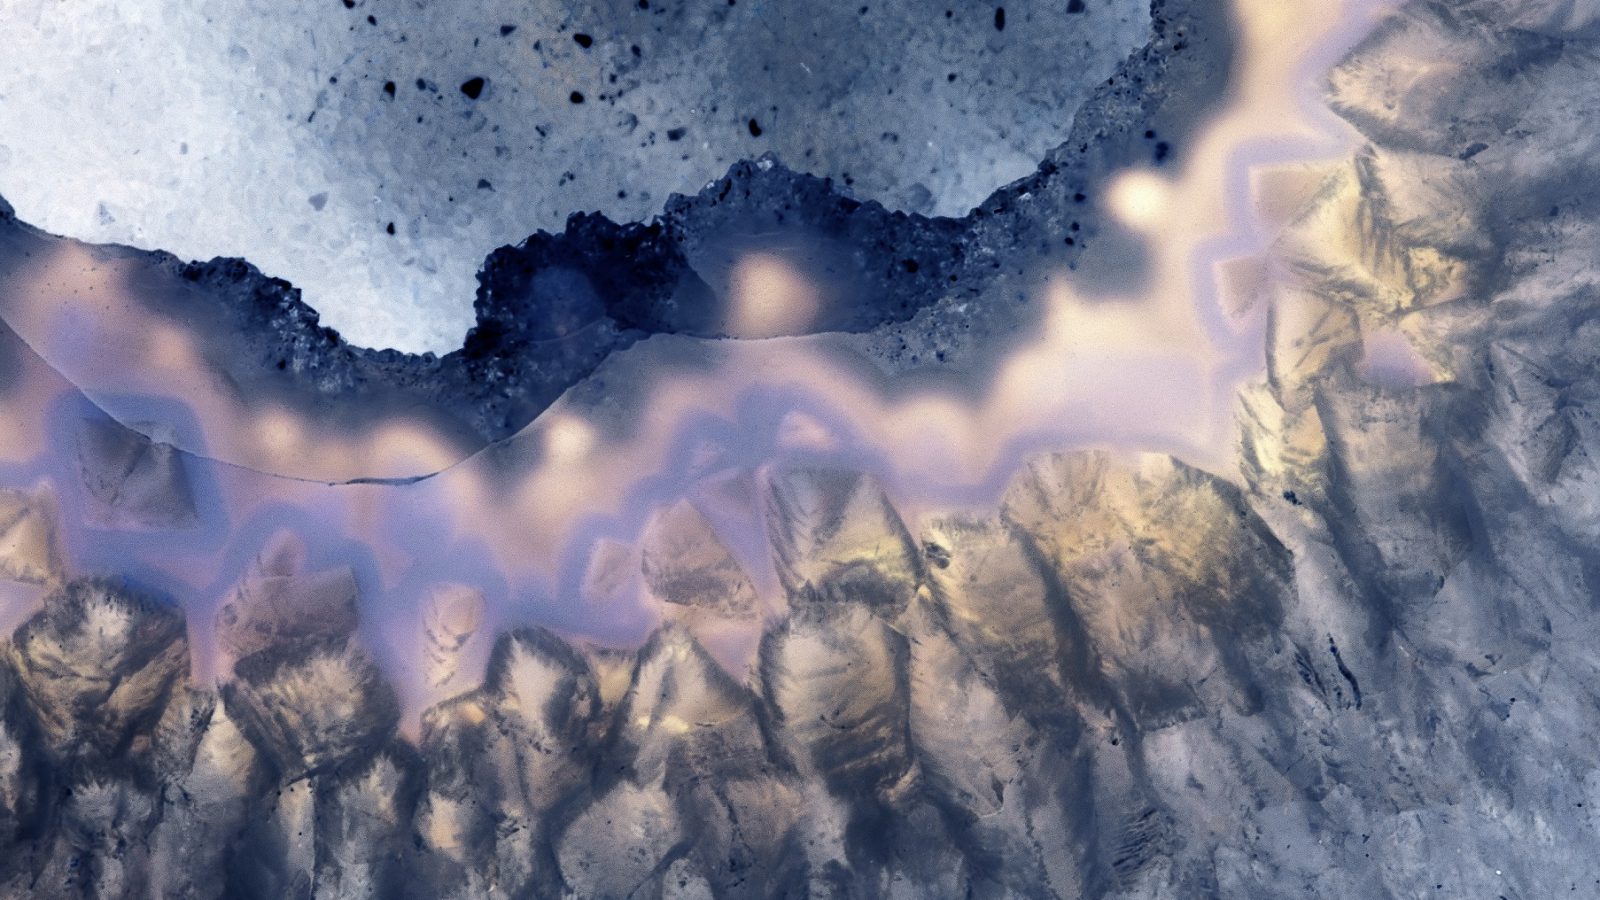 Closeup Macro Crystalline Crystal Patterns Textures In Geode Slices Of Rock